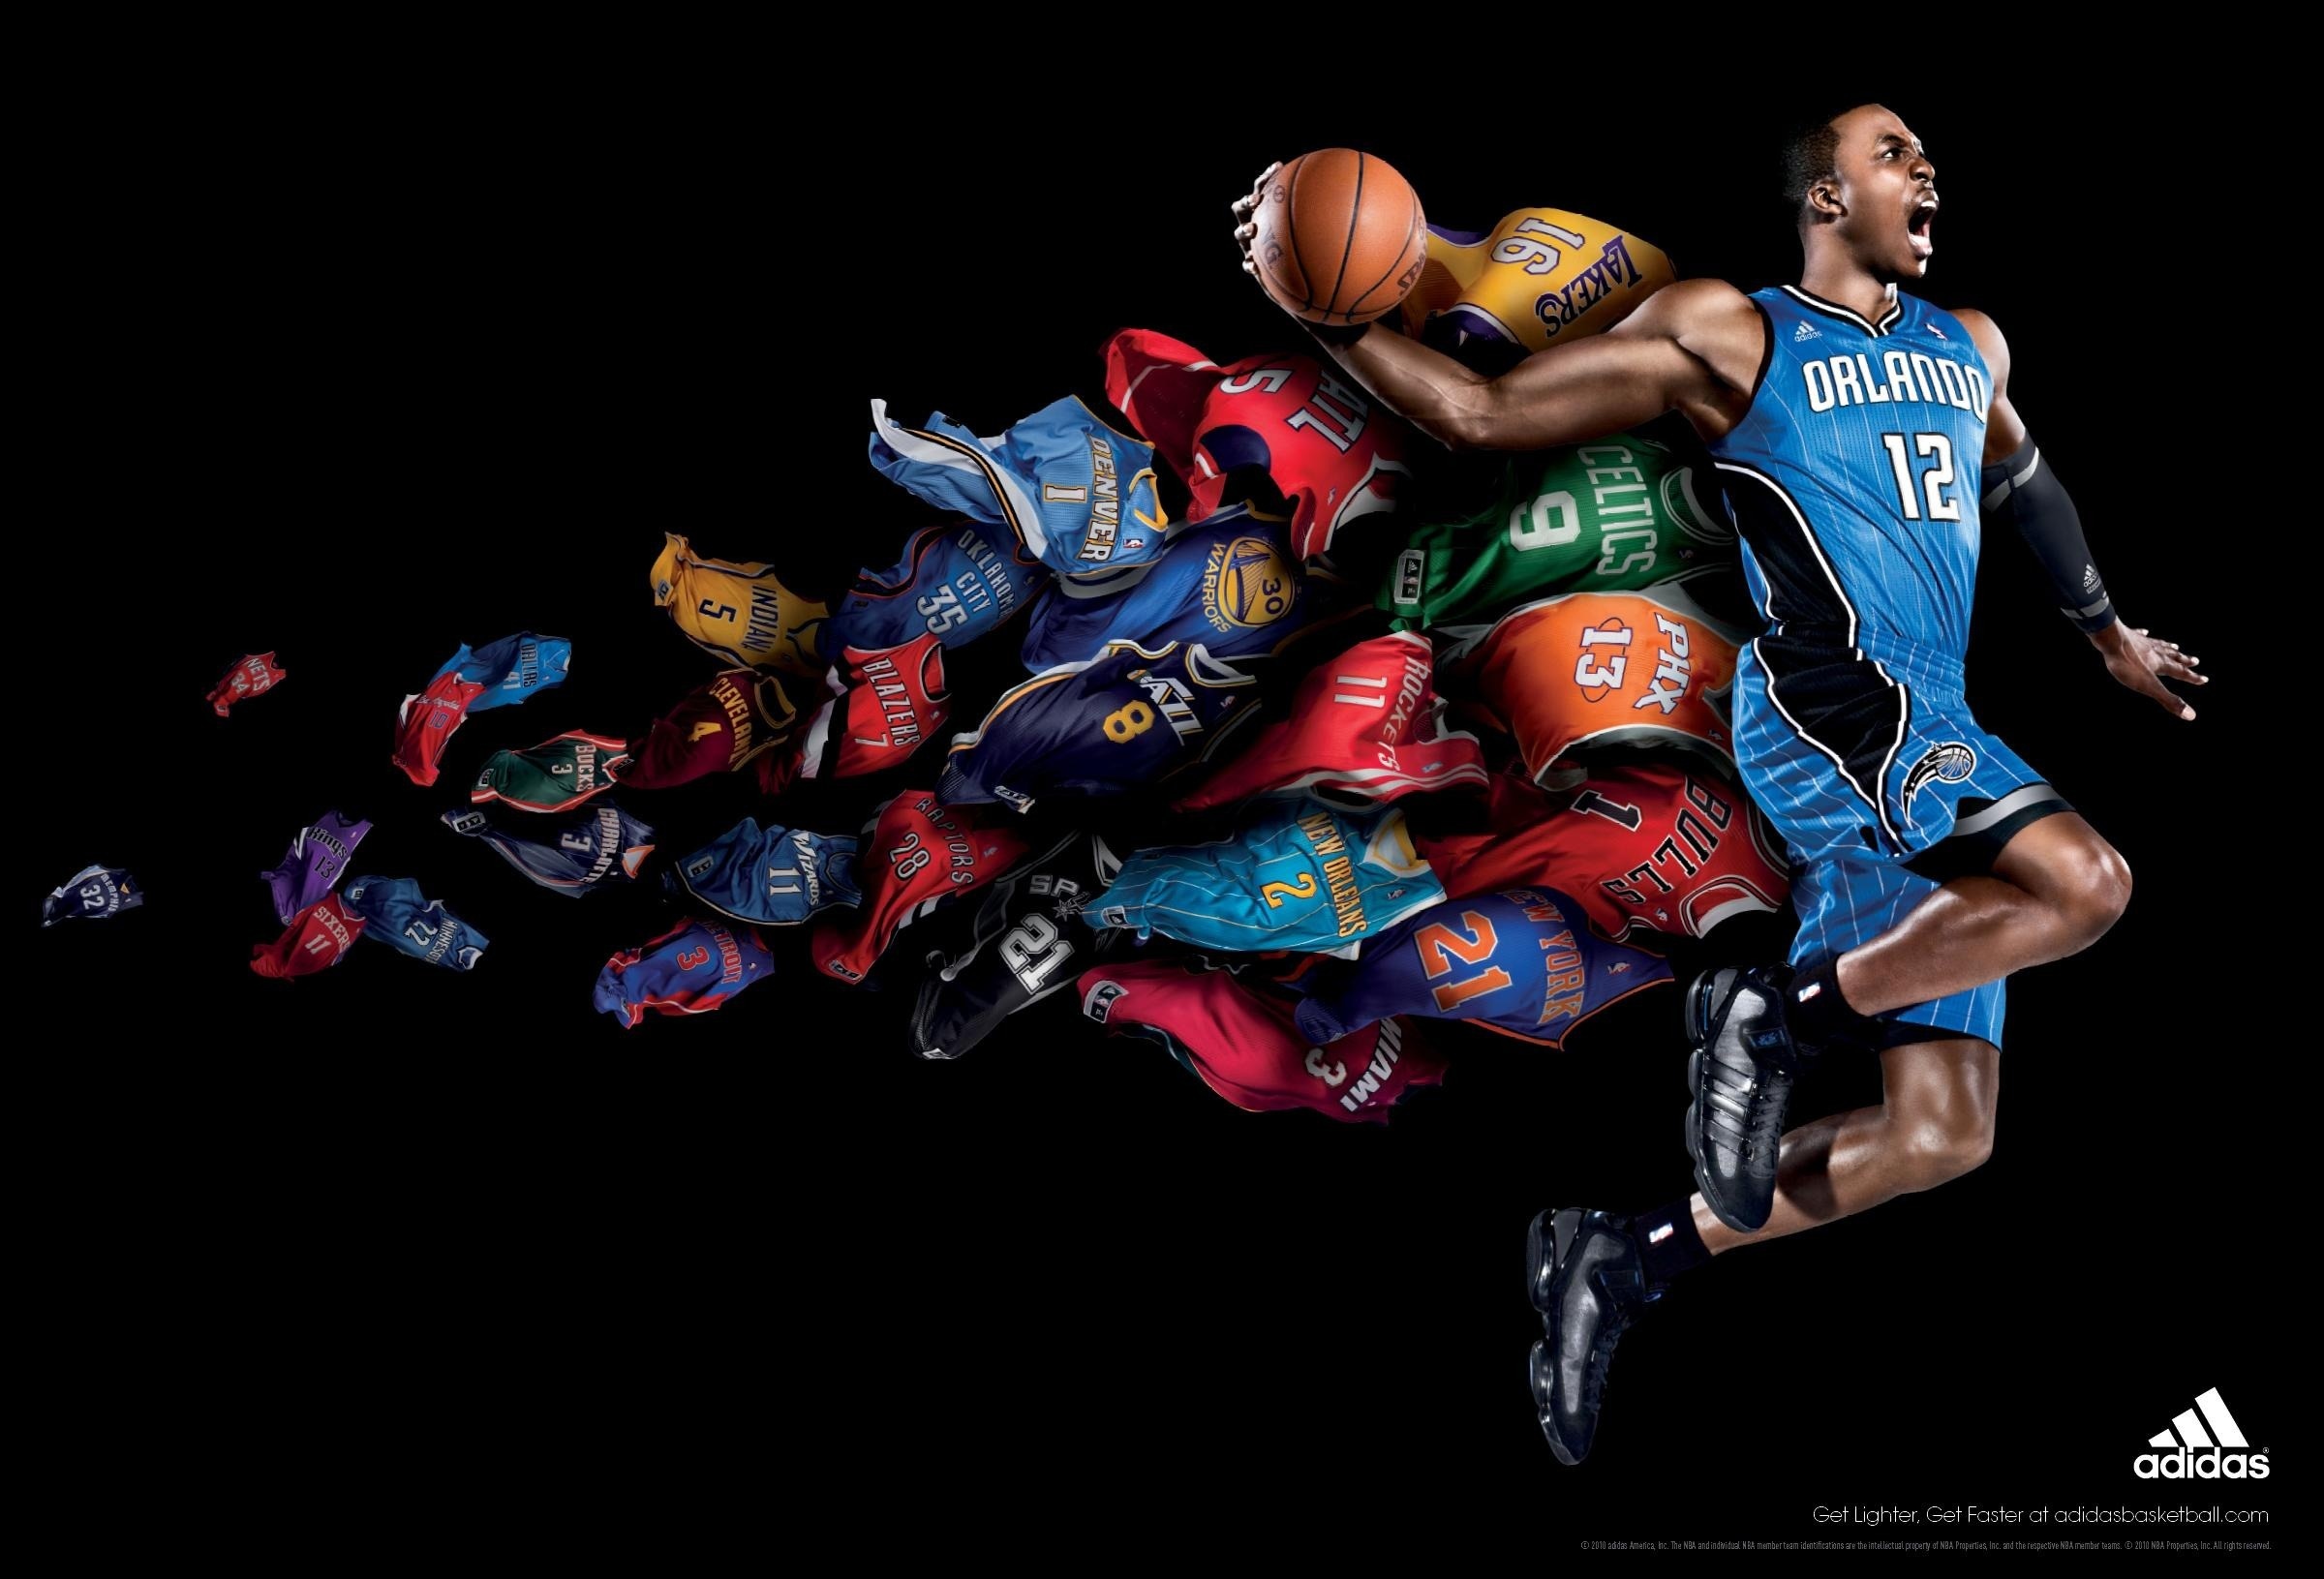 FunMozar Basketball Wallpapers HD 2015